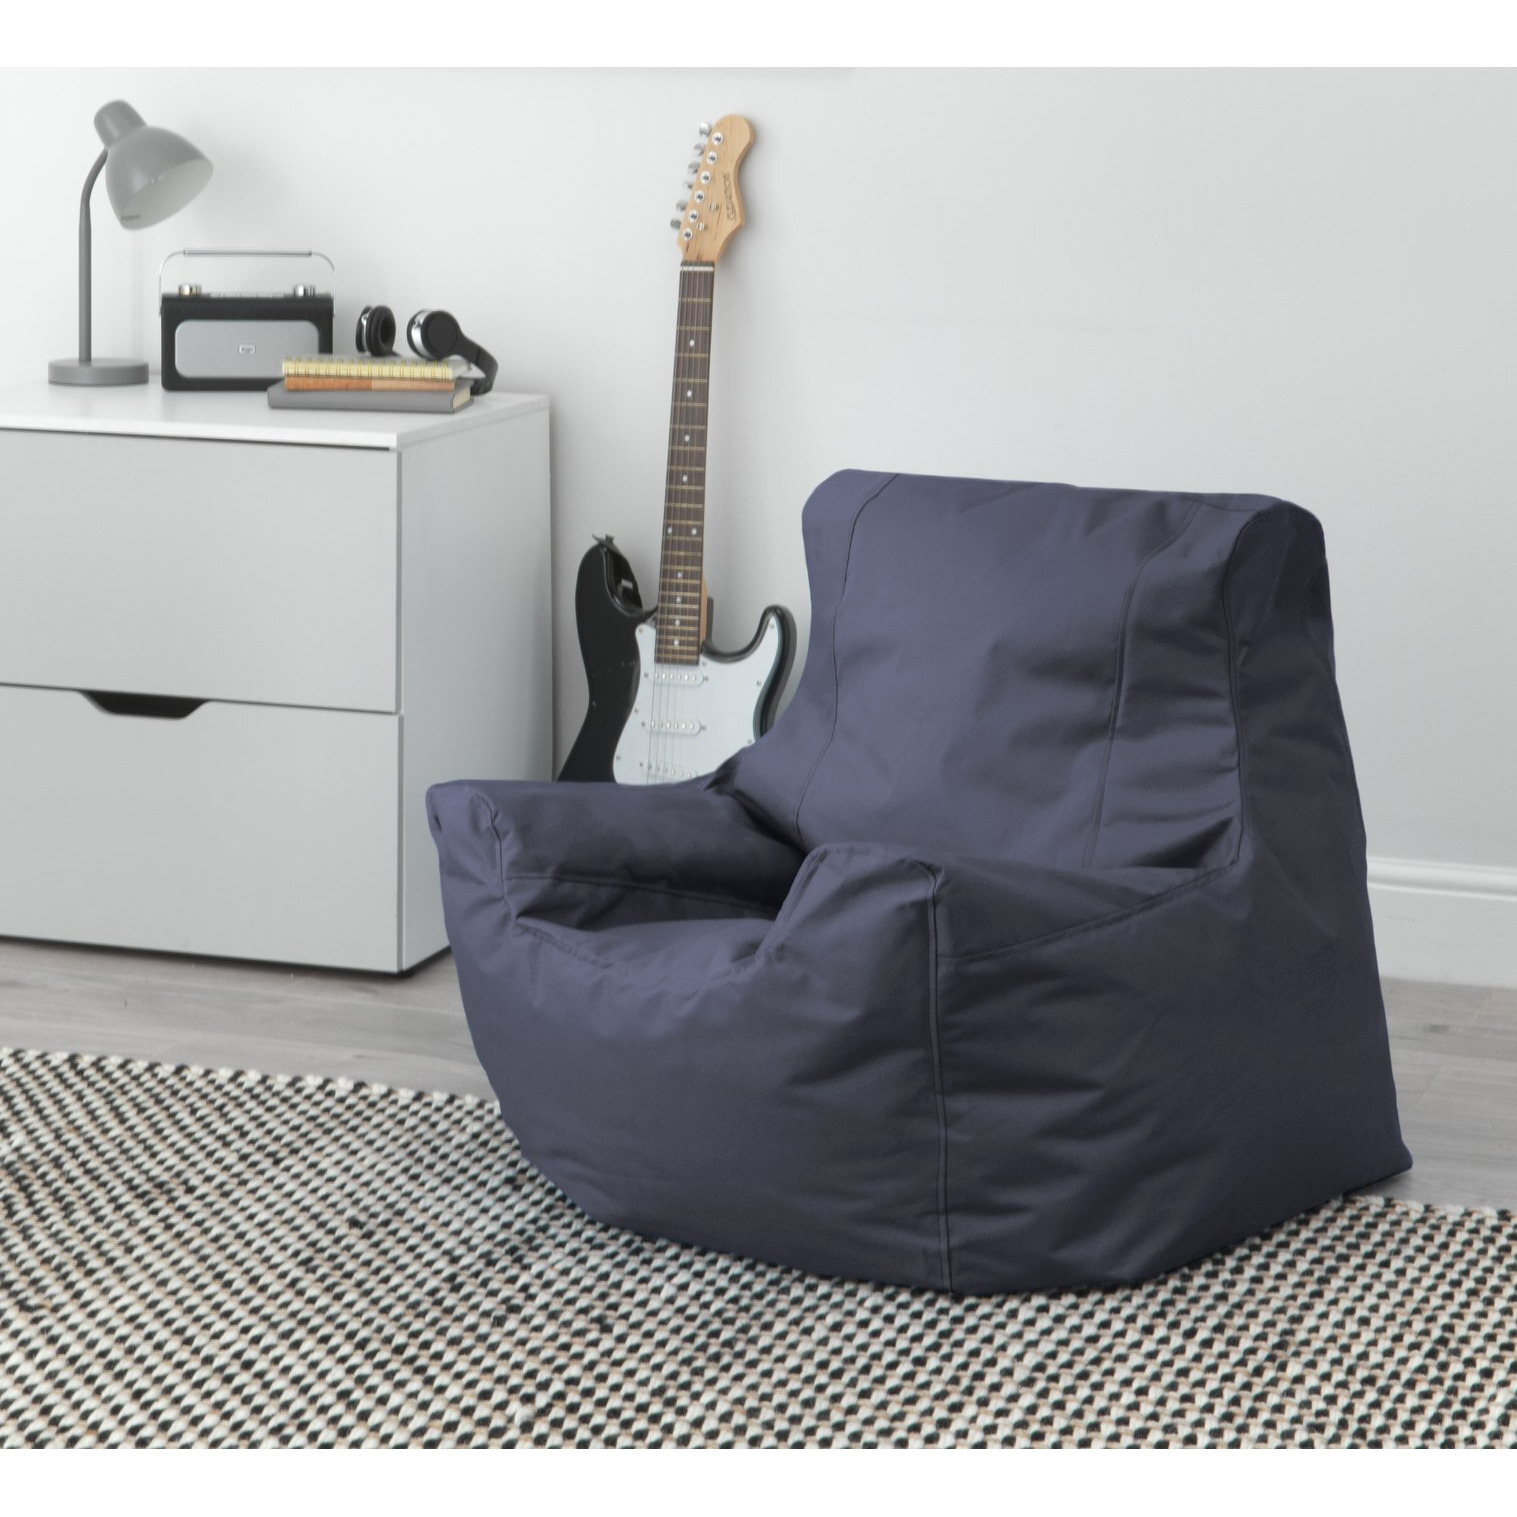 Kaikoo Large Black Teenager Bean Bag Chair - image 1